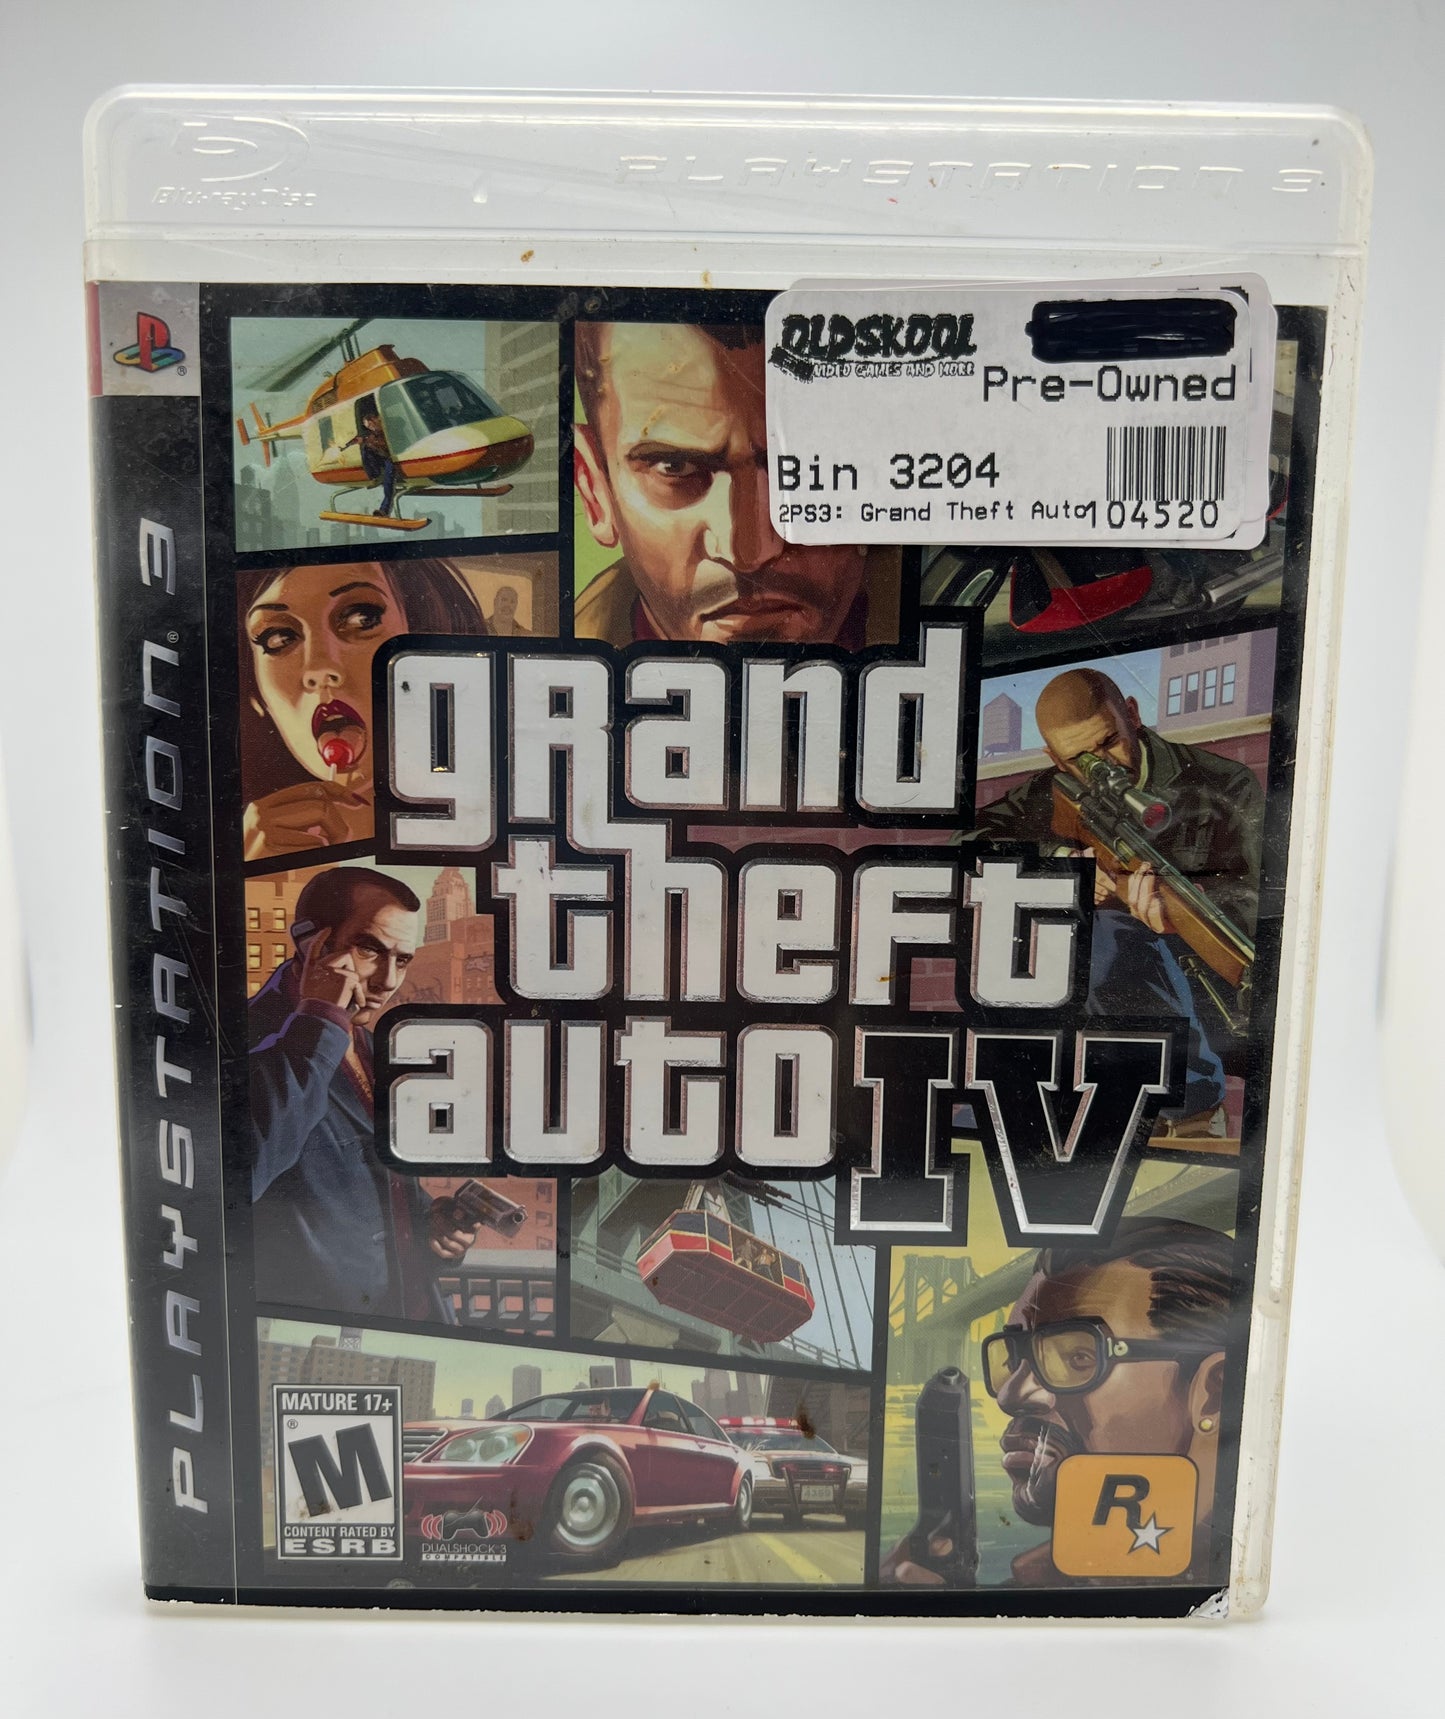 Grand Theft Auto IV 4 - Playstation 3